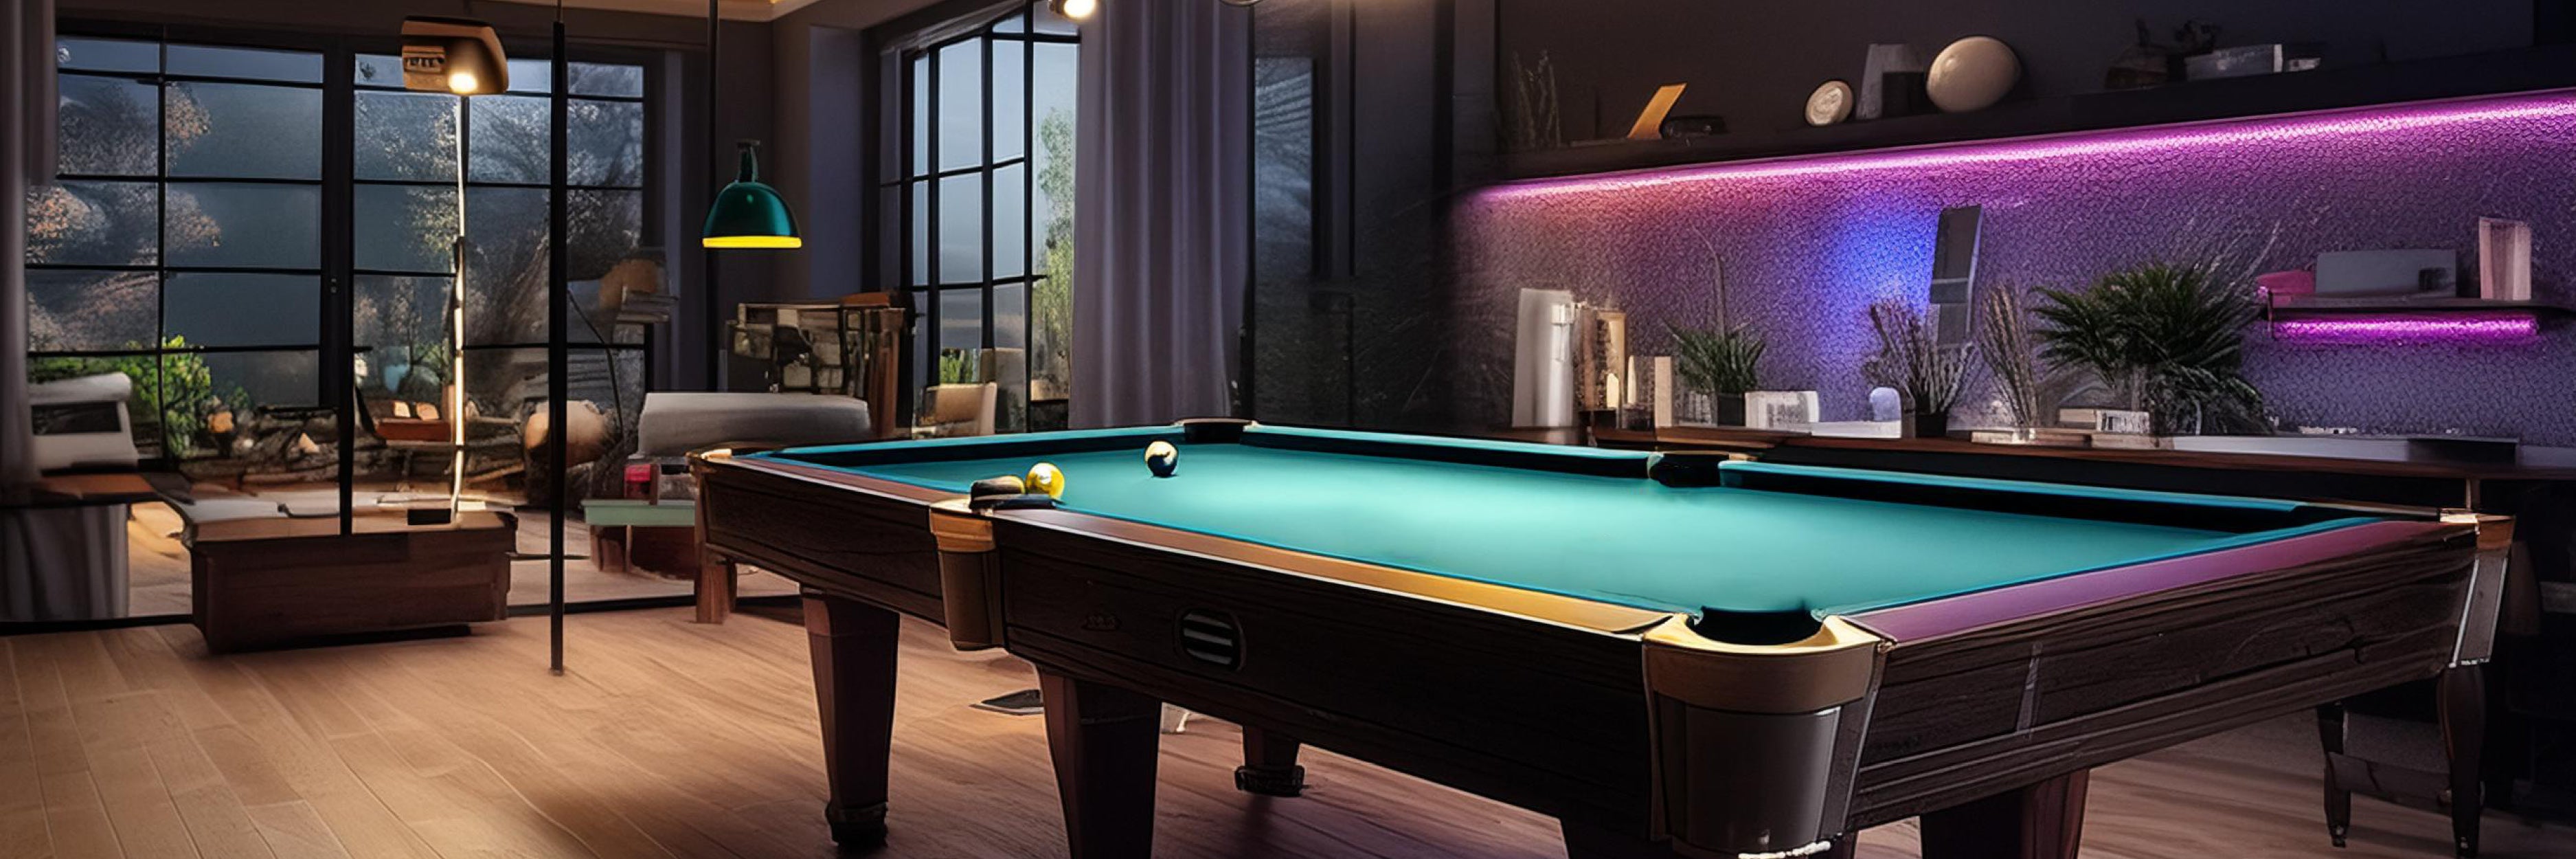 An entertainment room with a billiard table